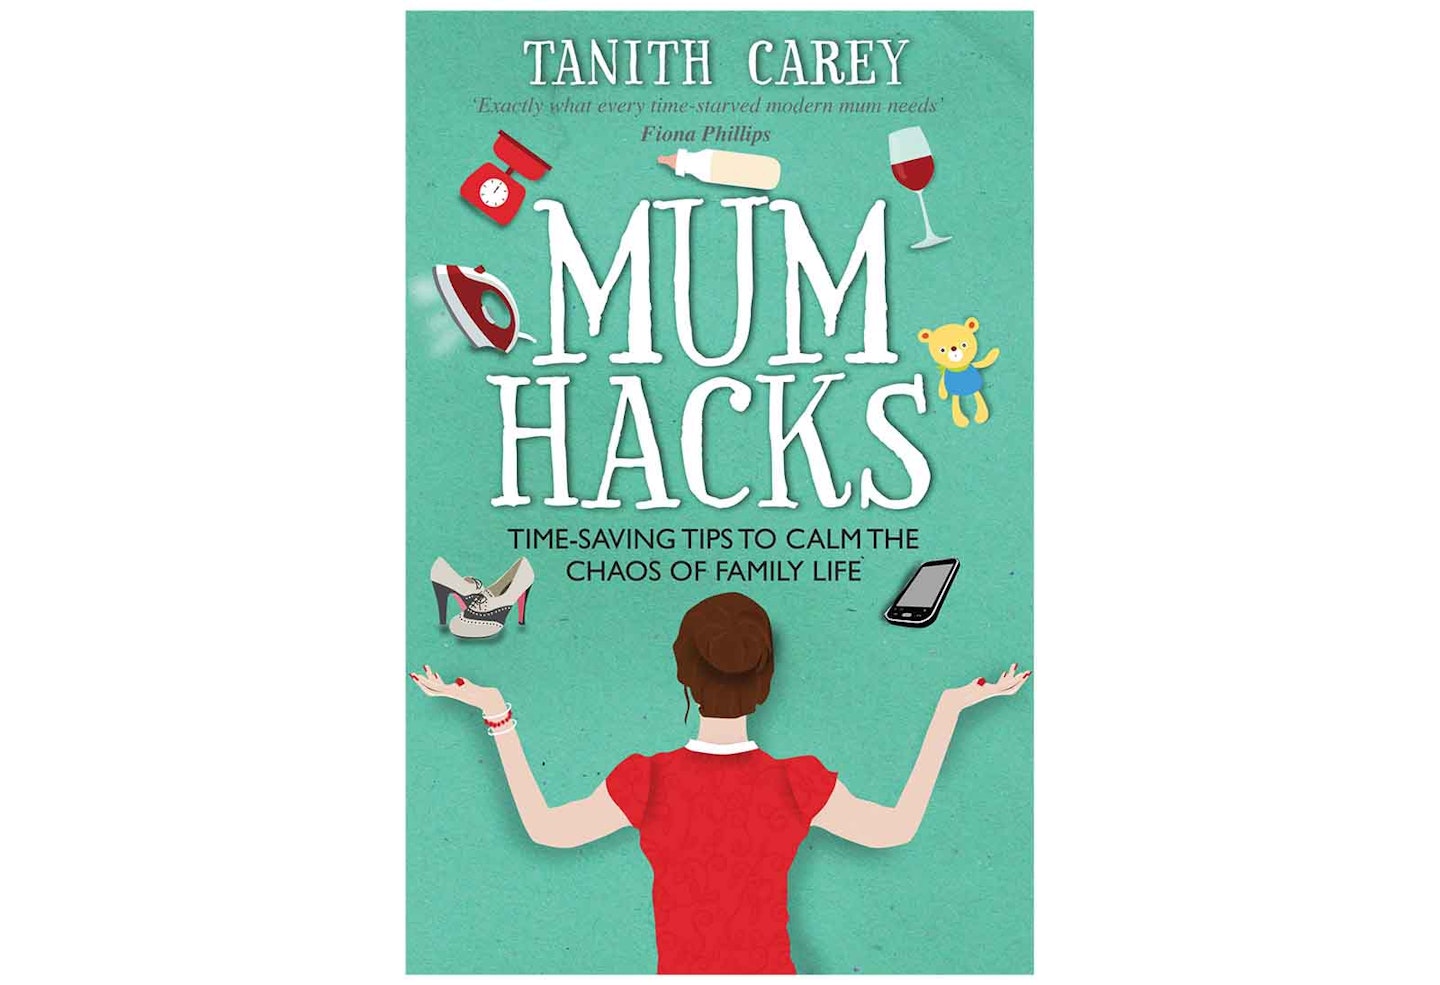 Mum Hacks by Tanith Carey